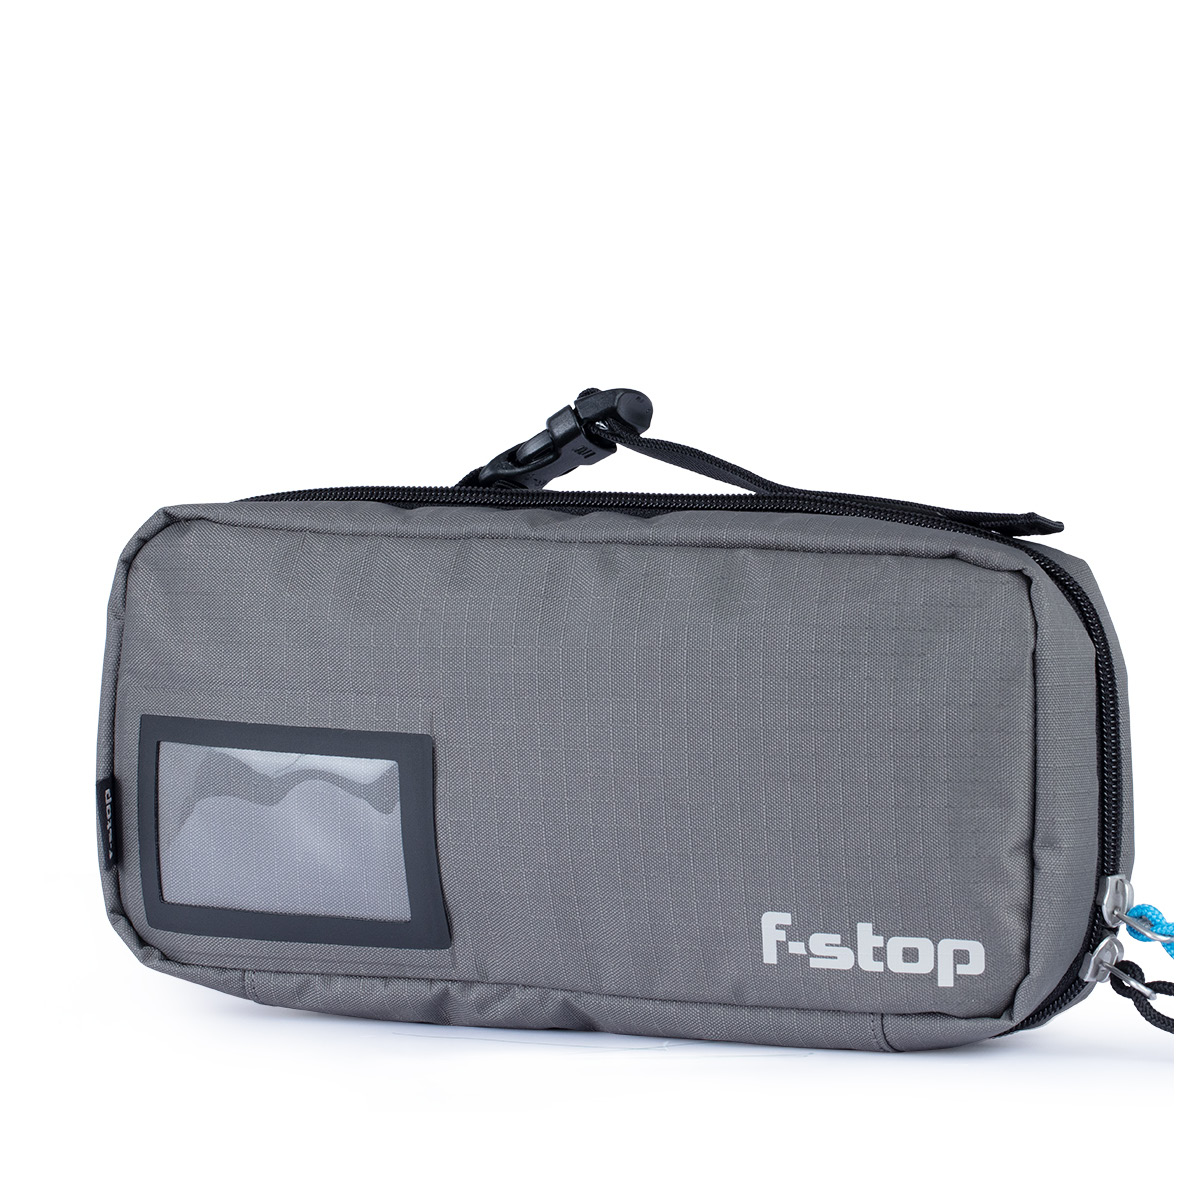 F-Stop Accessory Pouch Medium Grey/Black Zipper